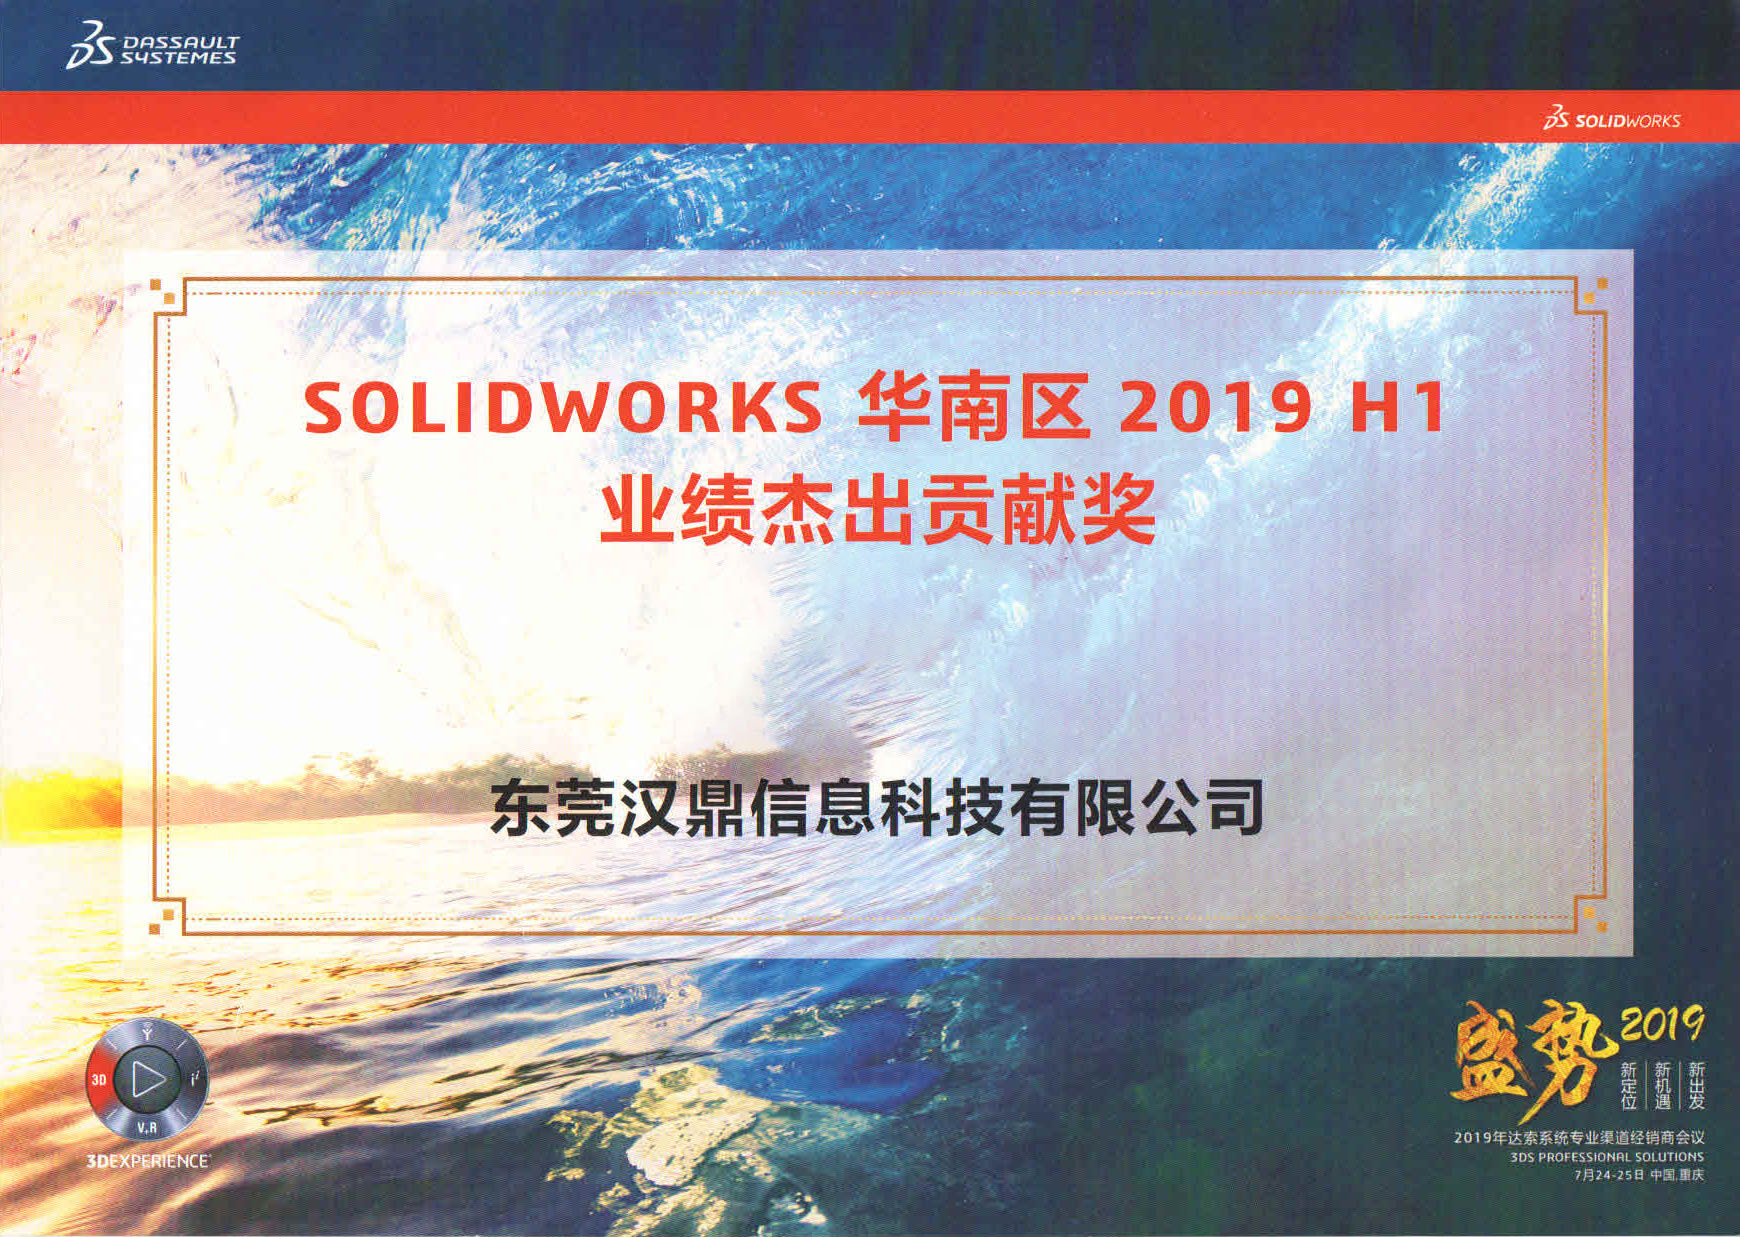 SOLIDWORKS 华南区 2019 H1业绩杰出贡献奖